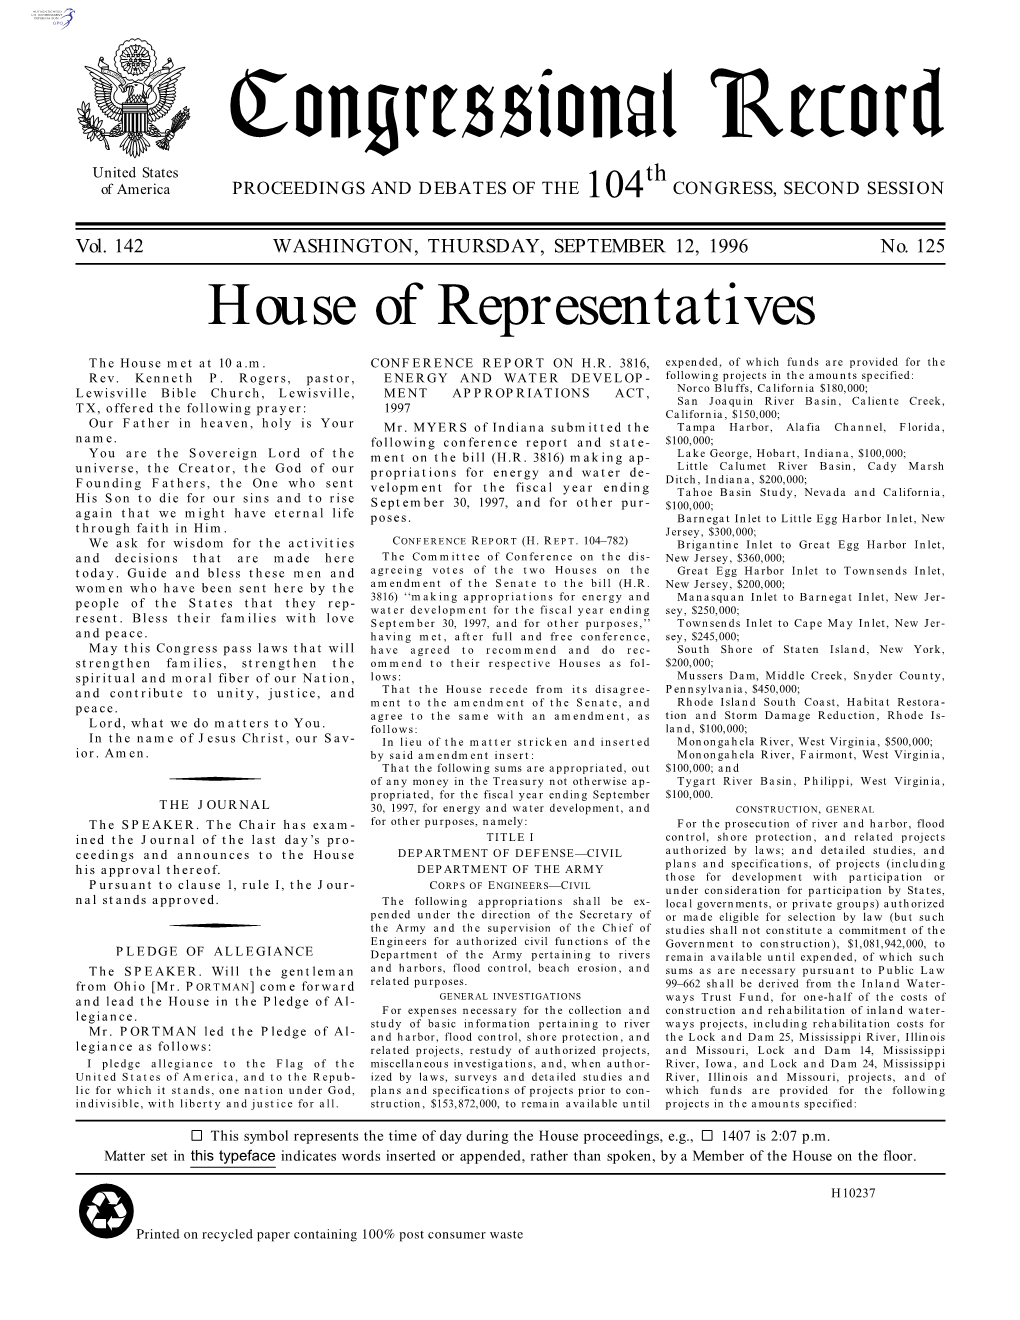 Senate to the Bill (H.R